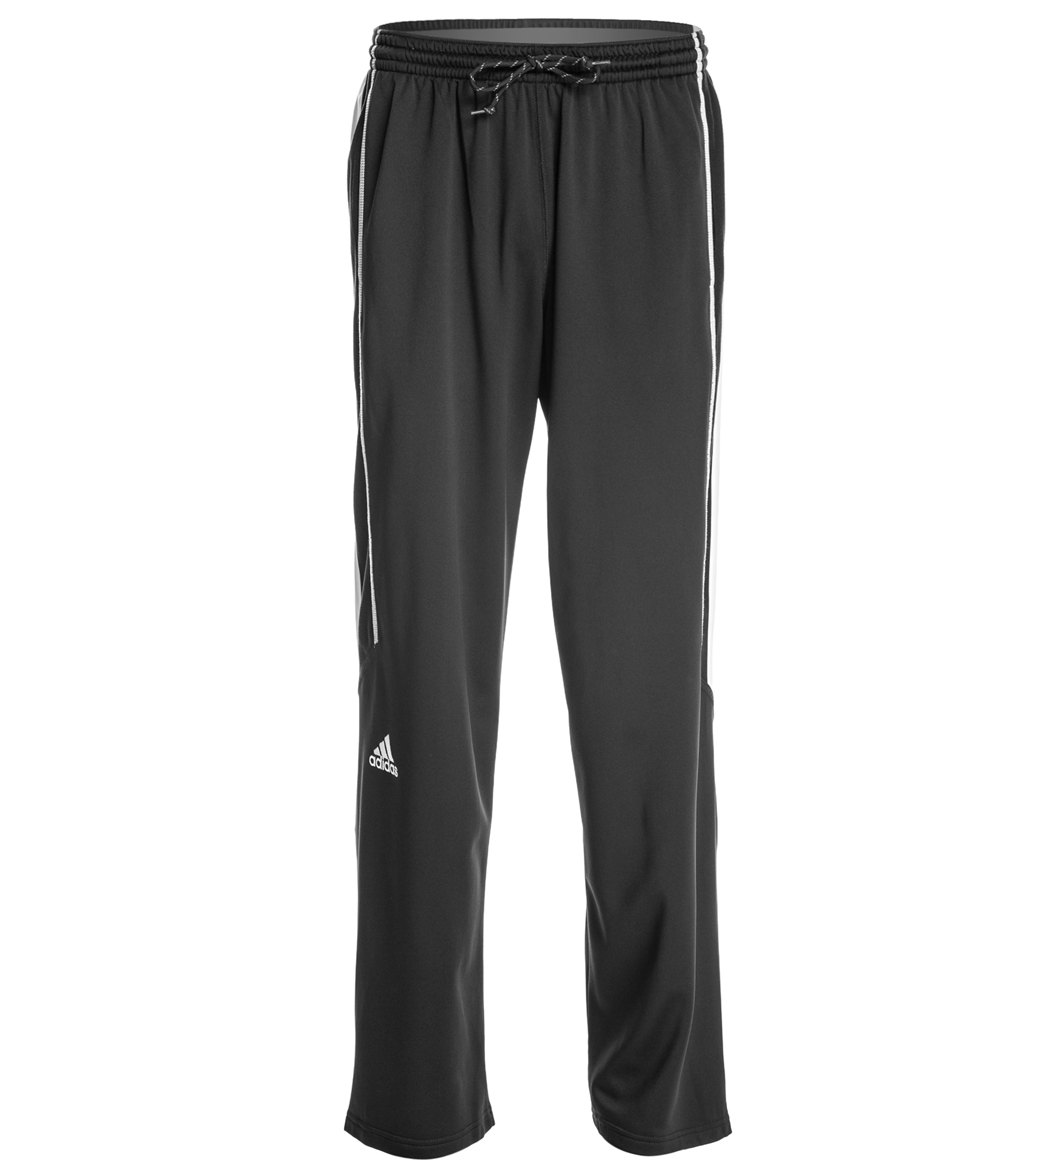 Adidas Men's Utility Warm Up Pants - Black Xl Polyester - Swimoutlet.com